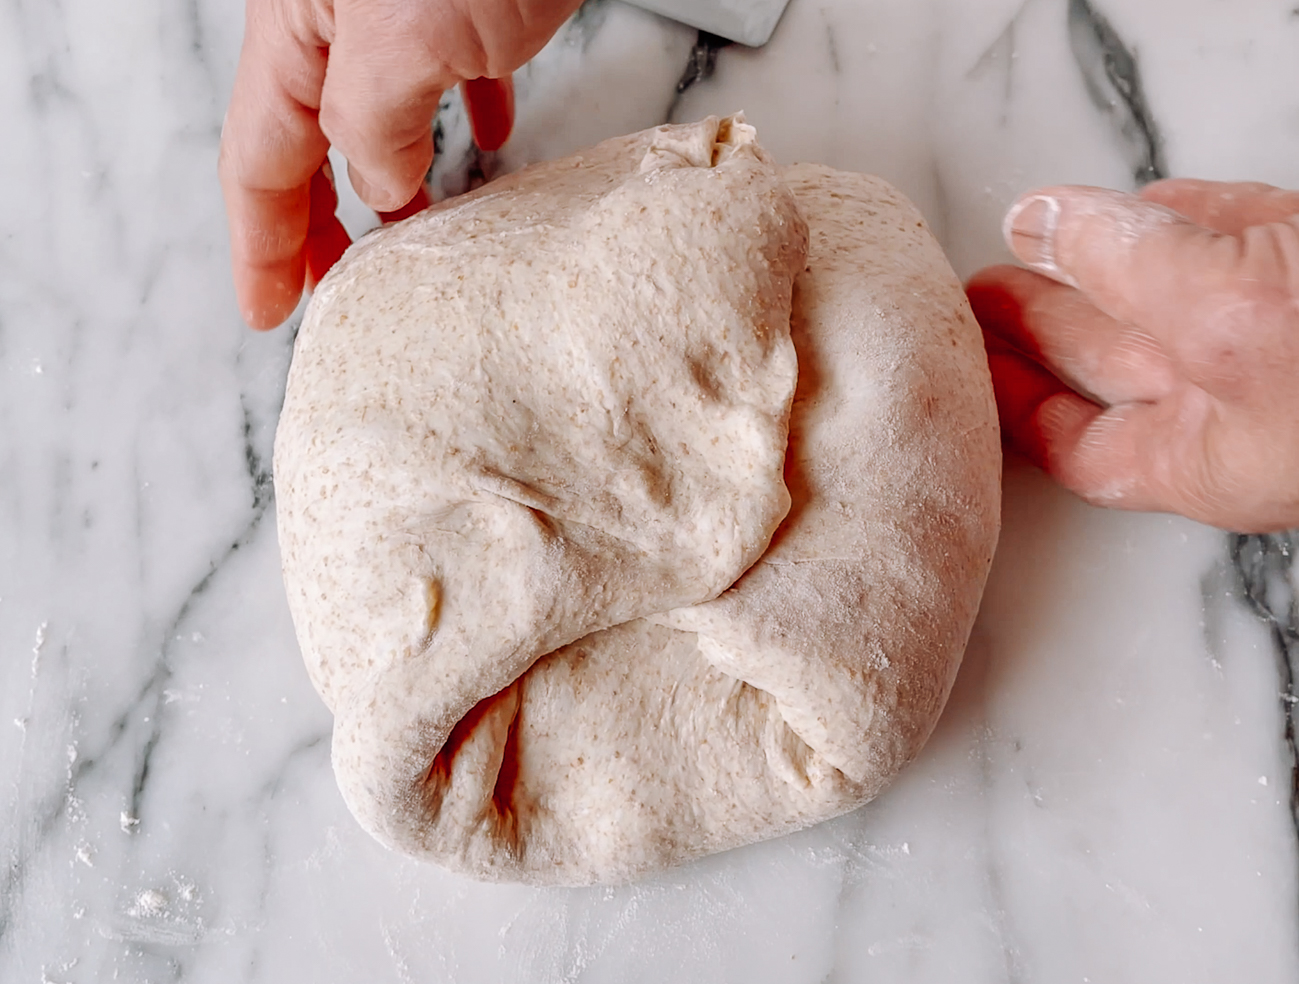 Folding sides of dough into center